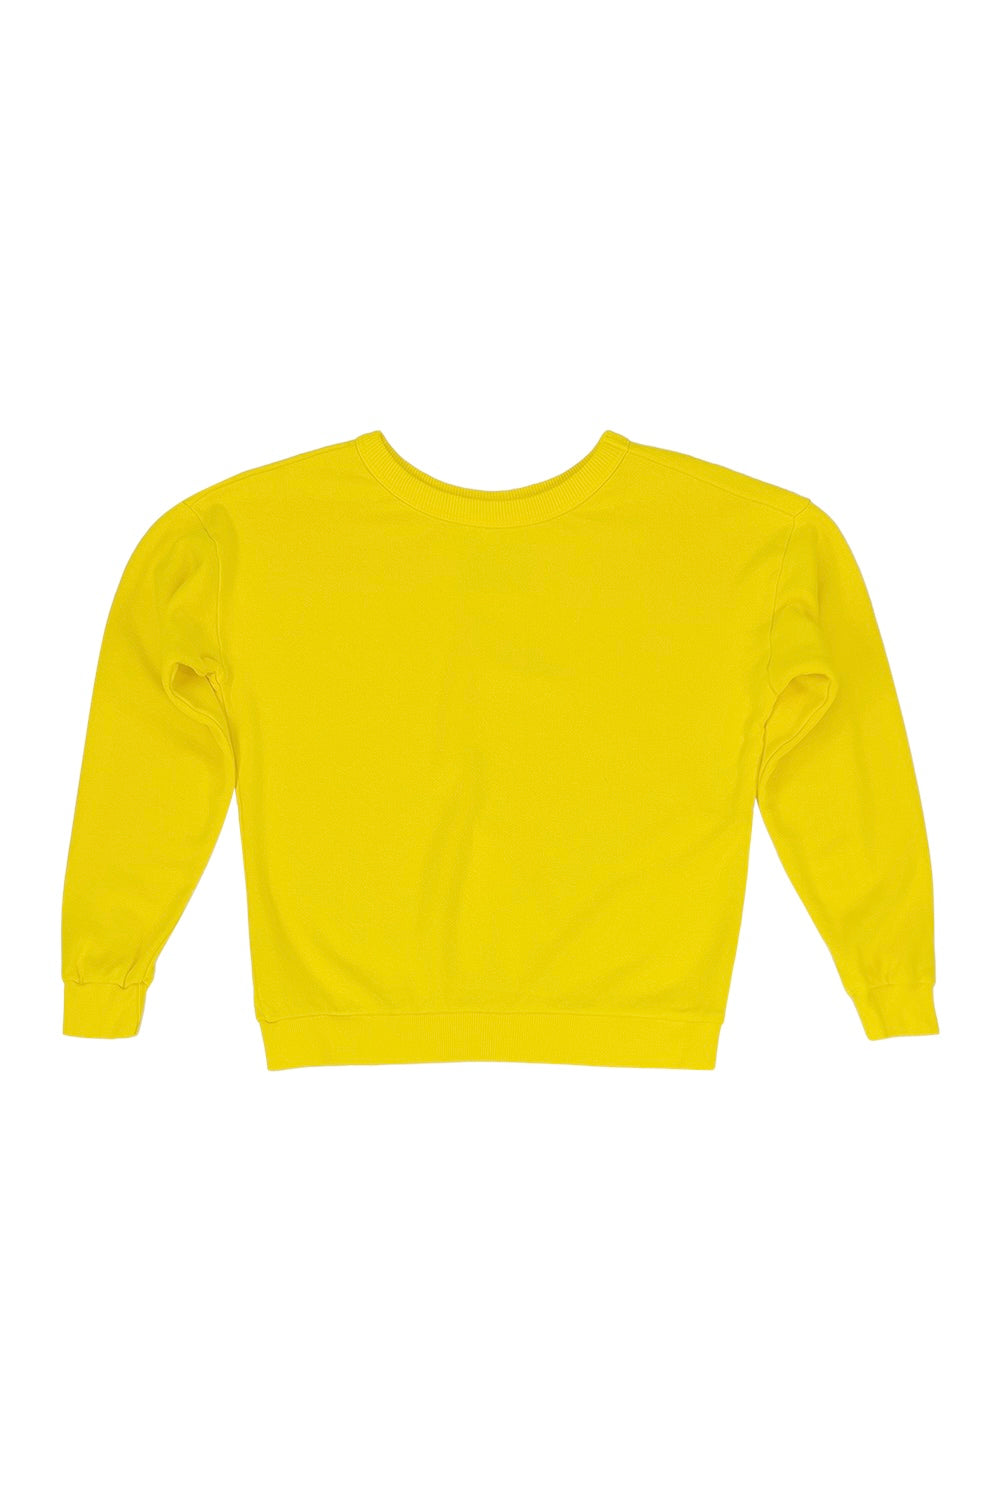 Crux Cropped Sweatshirt  Jungmaven Hemp Clothing & Accessories